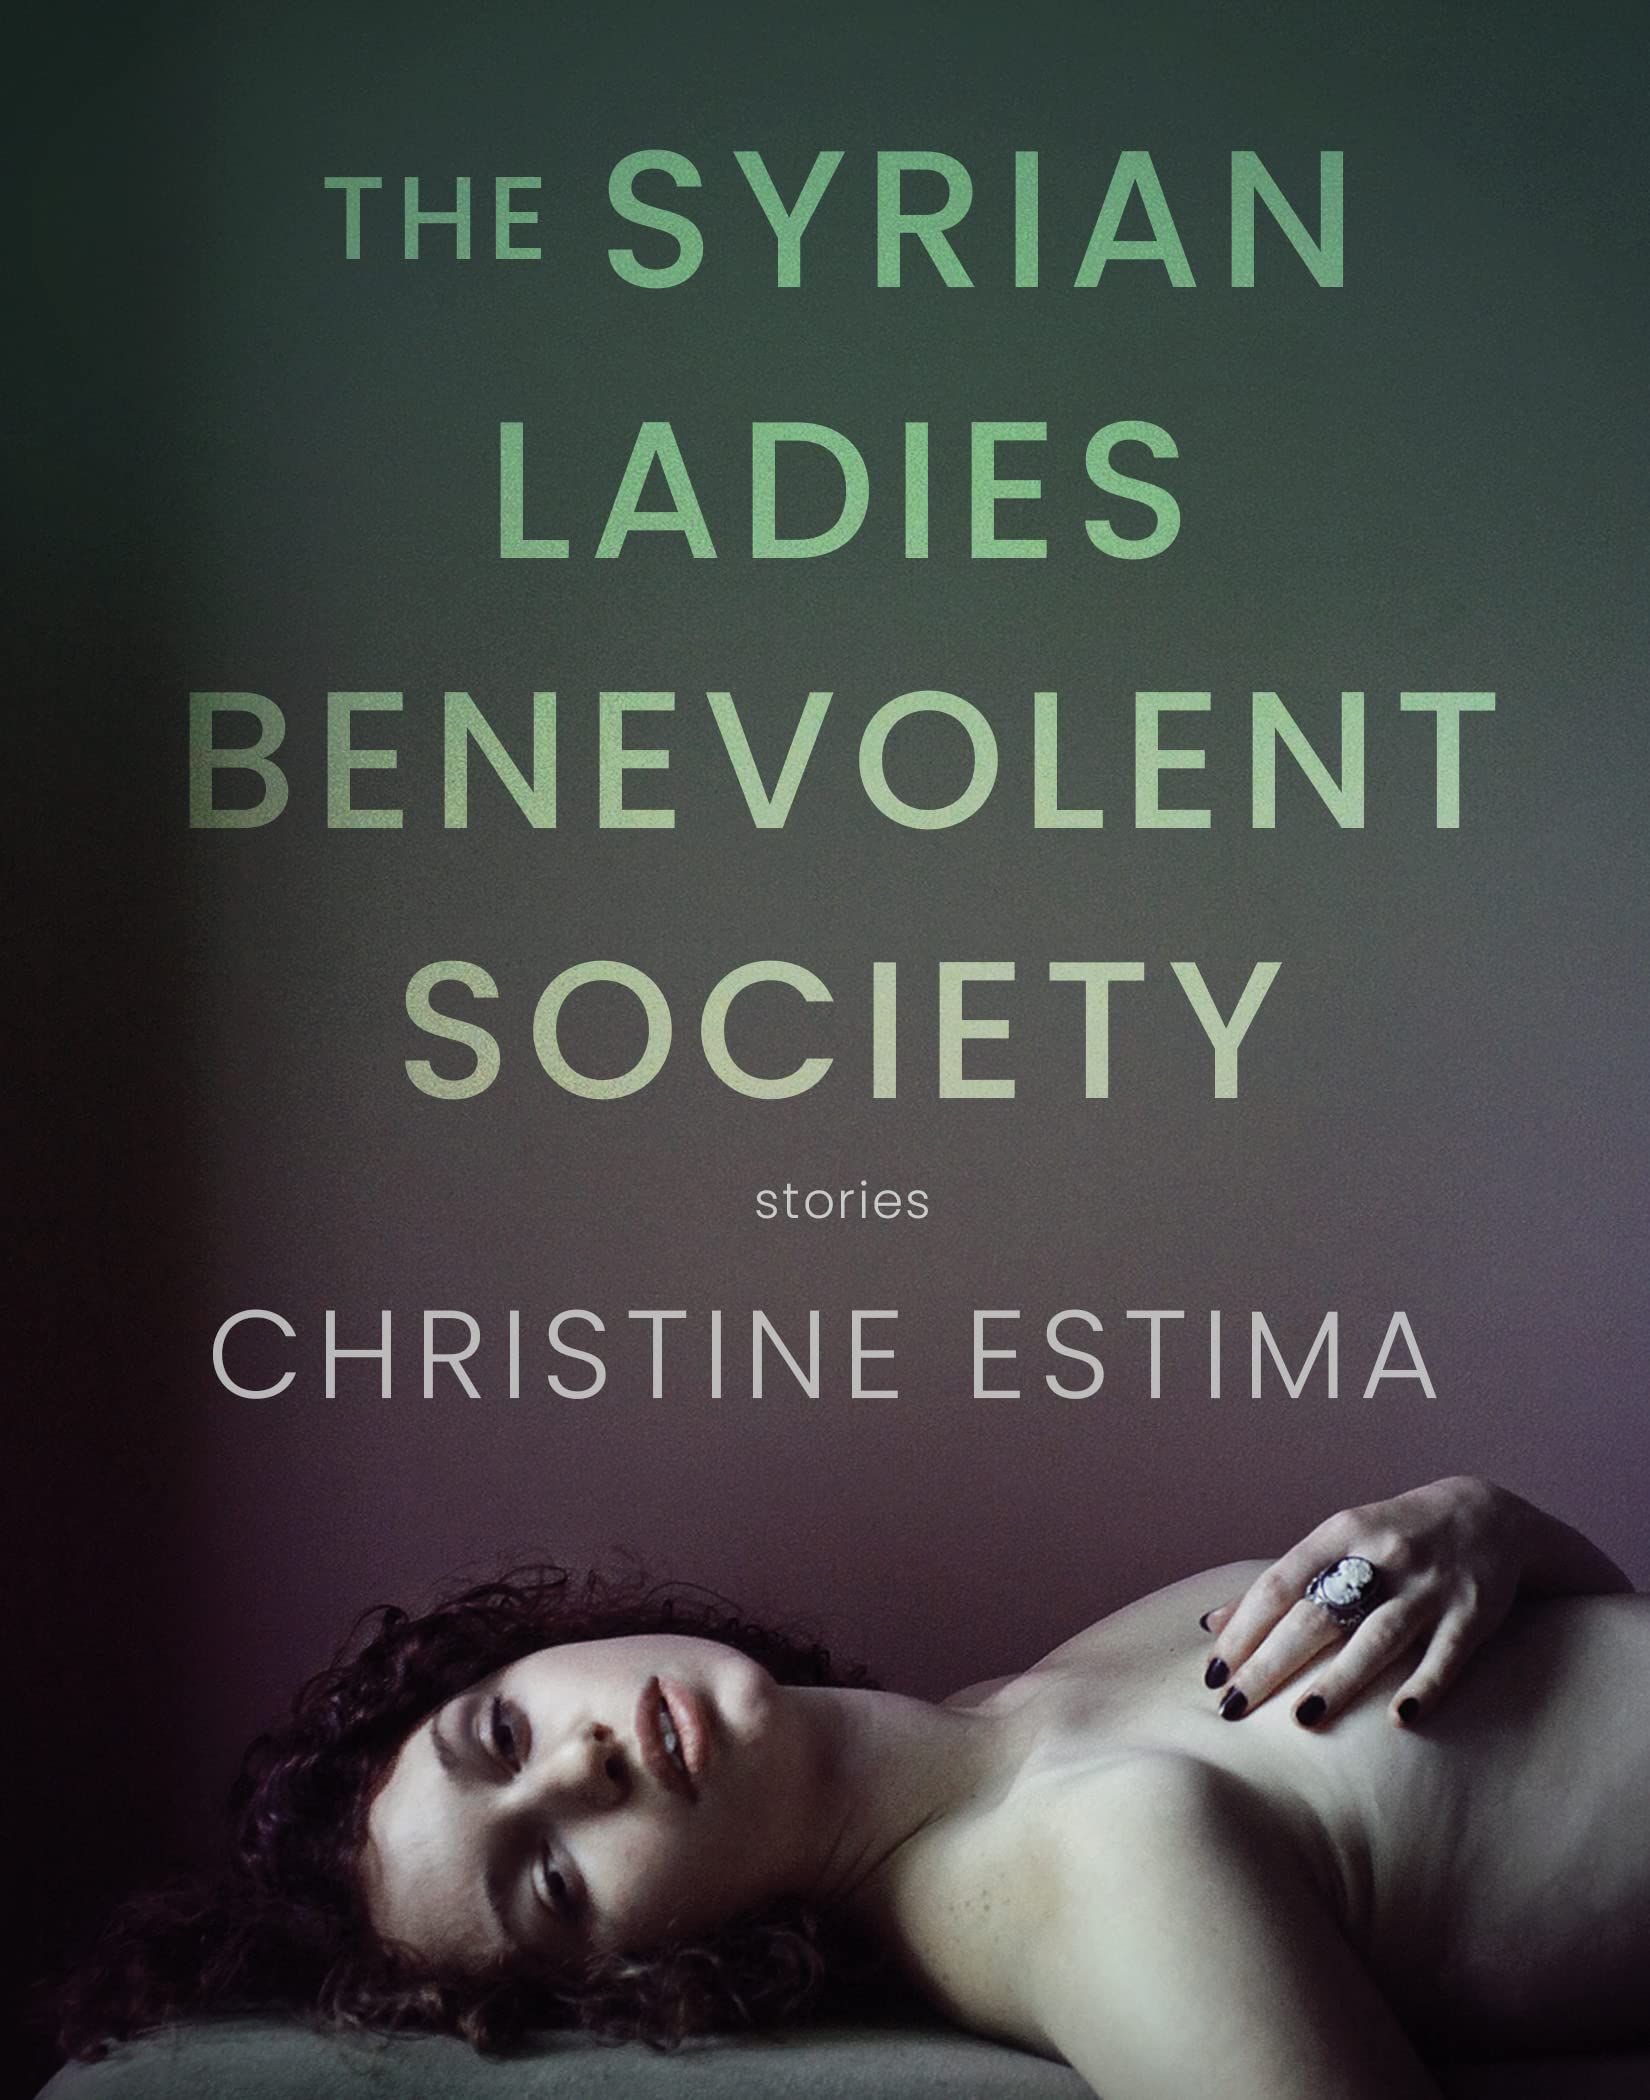 The Syrian Ladies Benevolent Society by Christine Estima cover